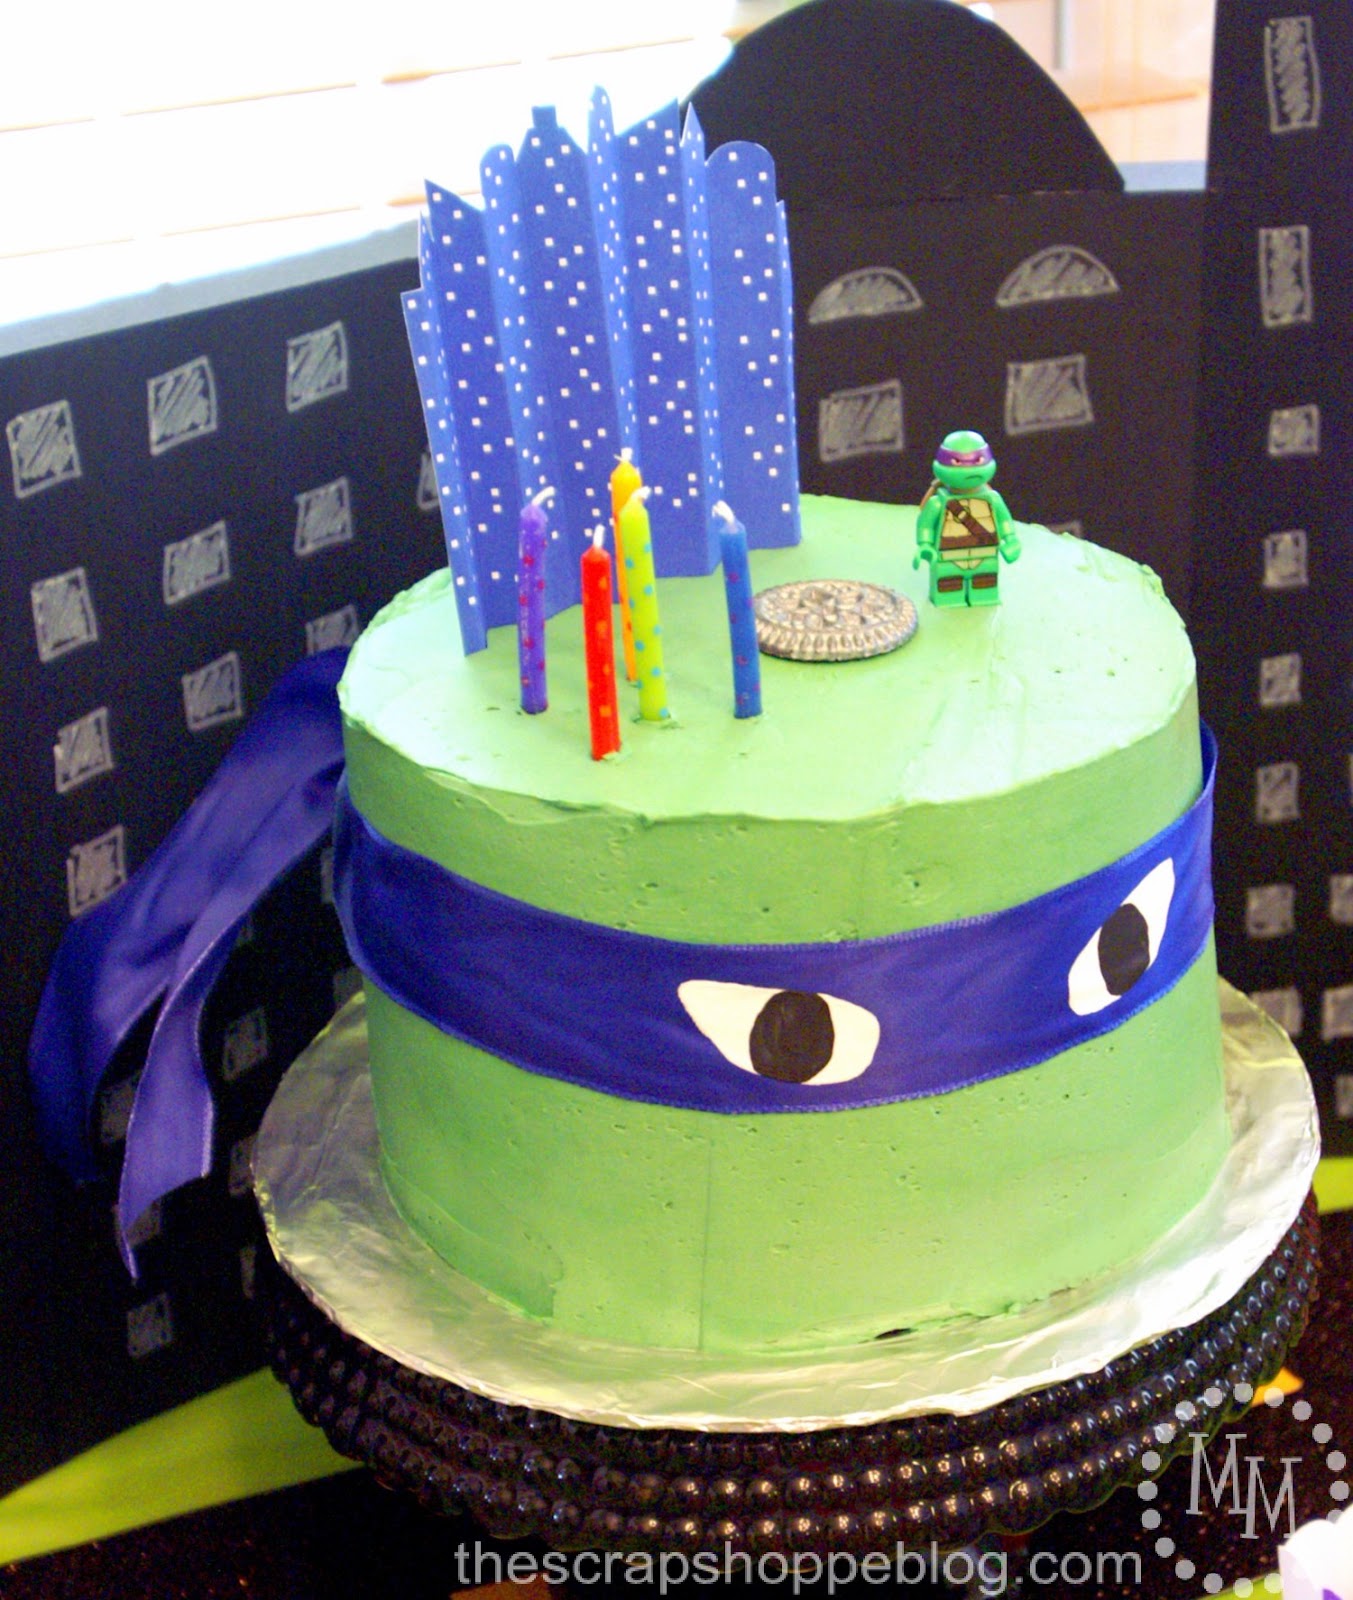 http://1.bp.blogspot.com/-JsGF7rhnkOc/Ui_fMhEytPI/AAAAAAAAQ_4/iRV6Td2teV4/s1600/teenage-mutant-ninja-turtle-cake.JPG